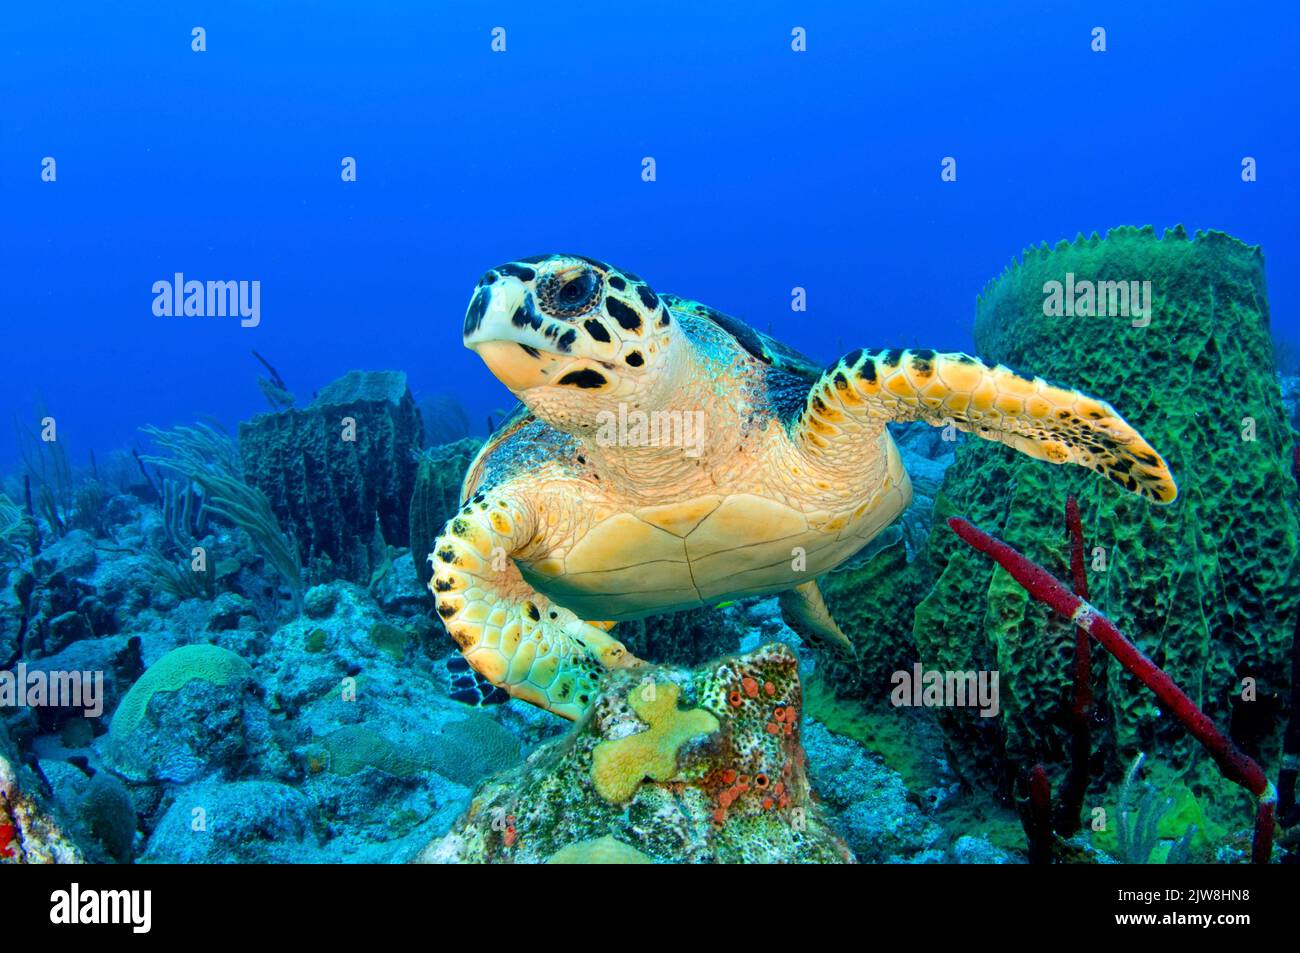 Tortuga carey (Eretmochelys imbricata) en un arrecife de coral caribeño, Statia, St. Eustatius, Caribe. Foto de stock